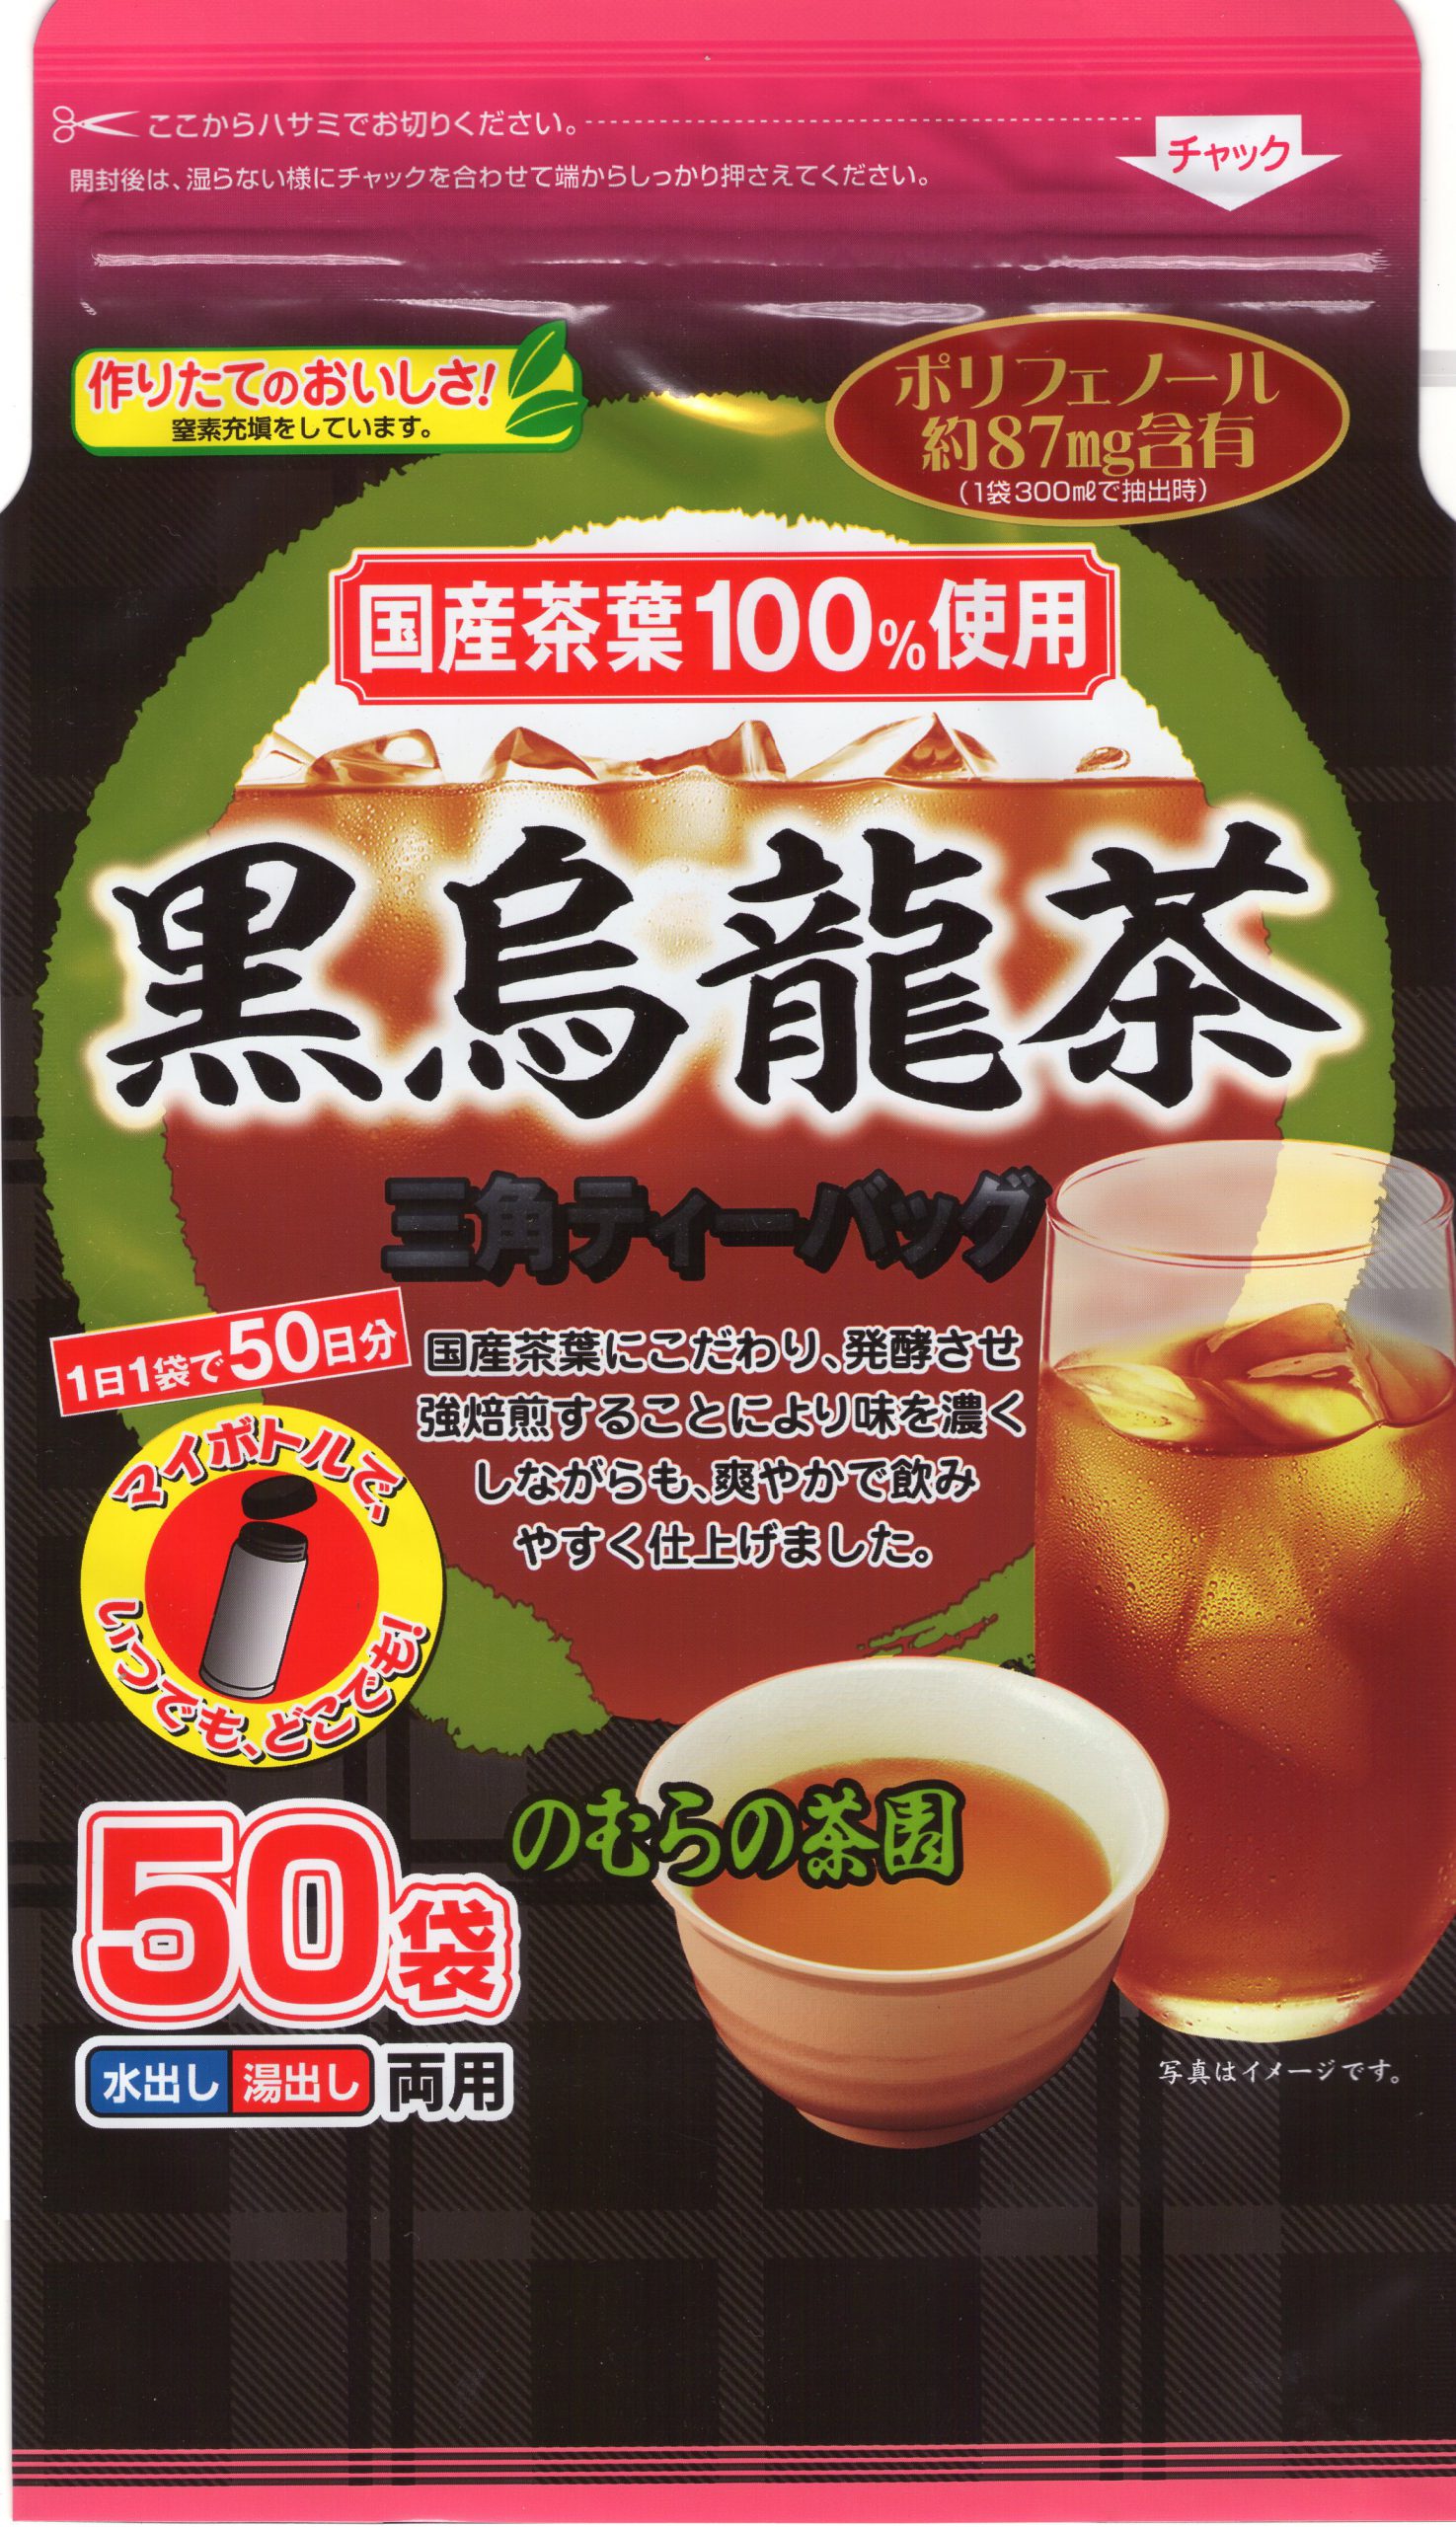 Domestic black oolong tea 3g×50 bags